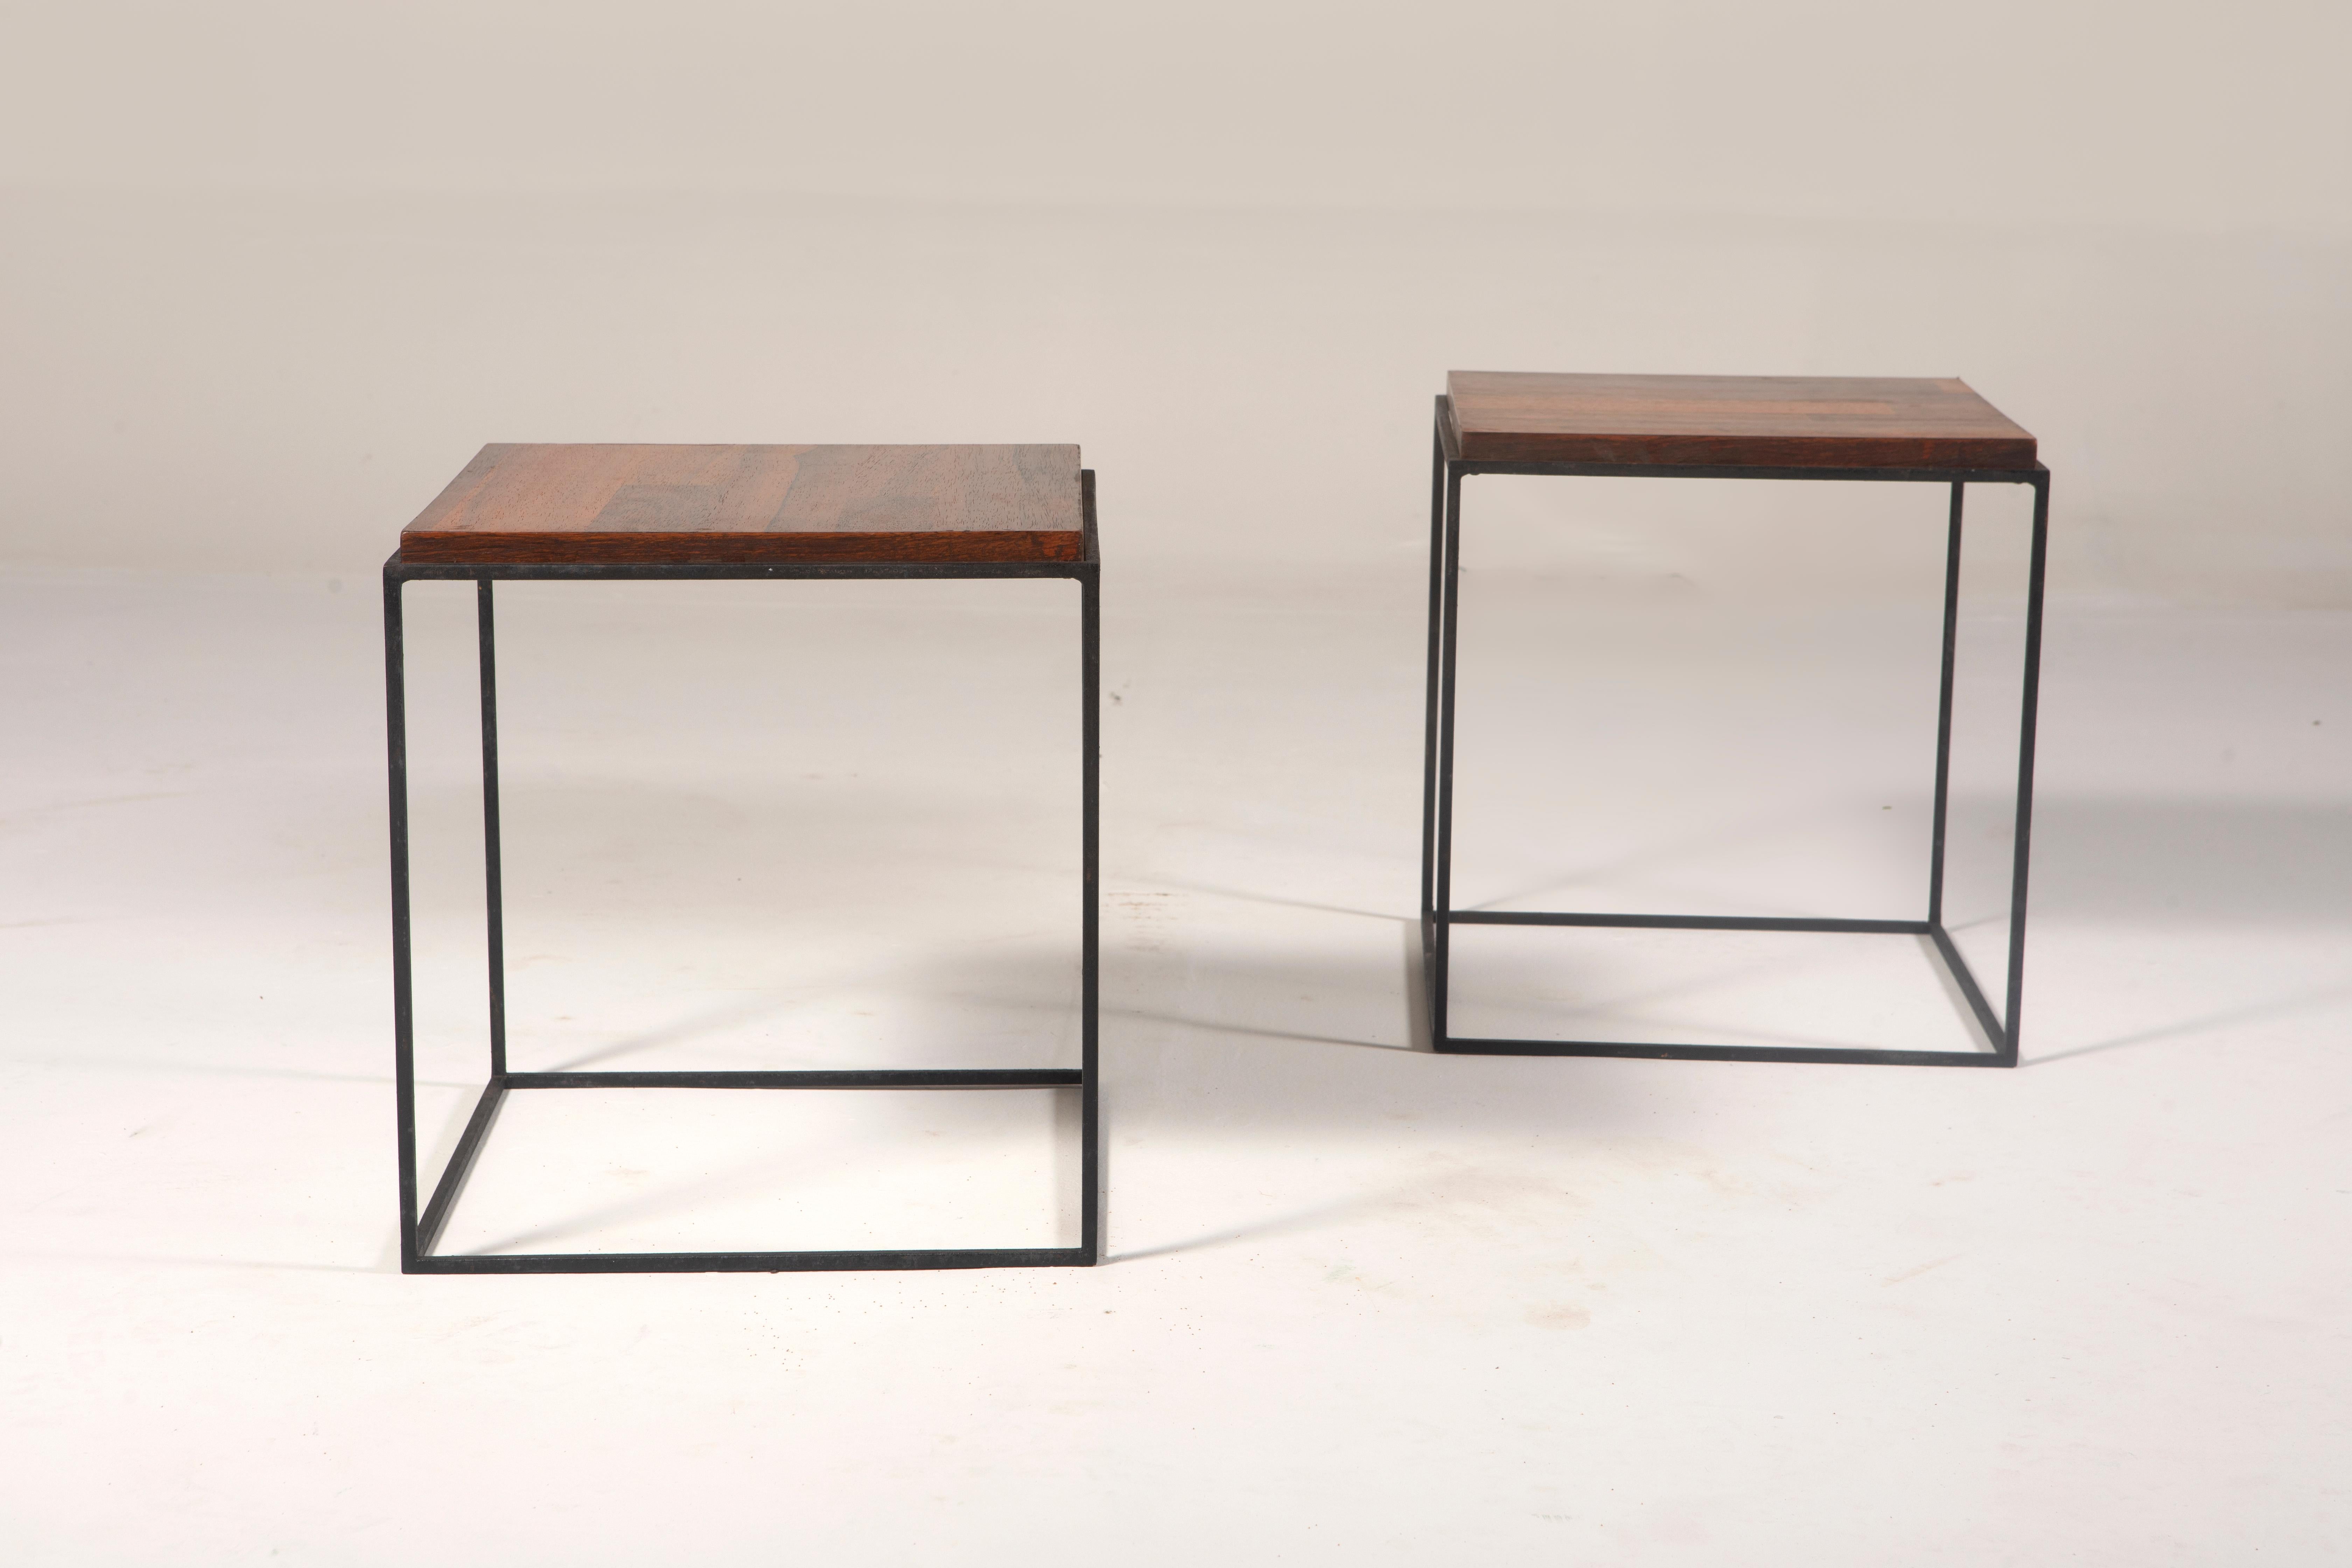 Varnished Pair of Side Tables by Brazilian Designer, 1960s For Sale